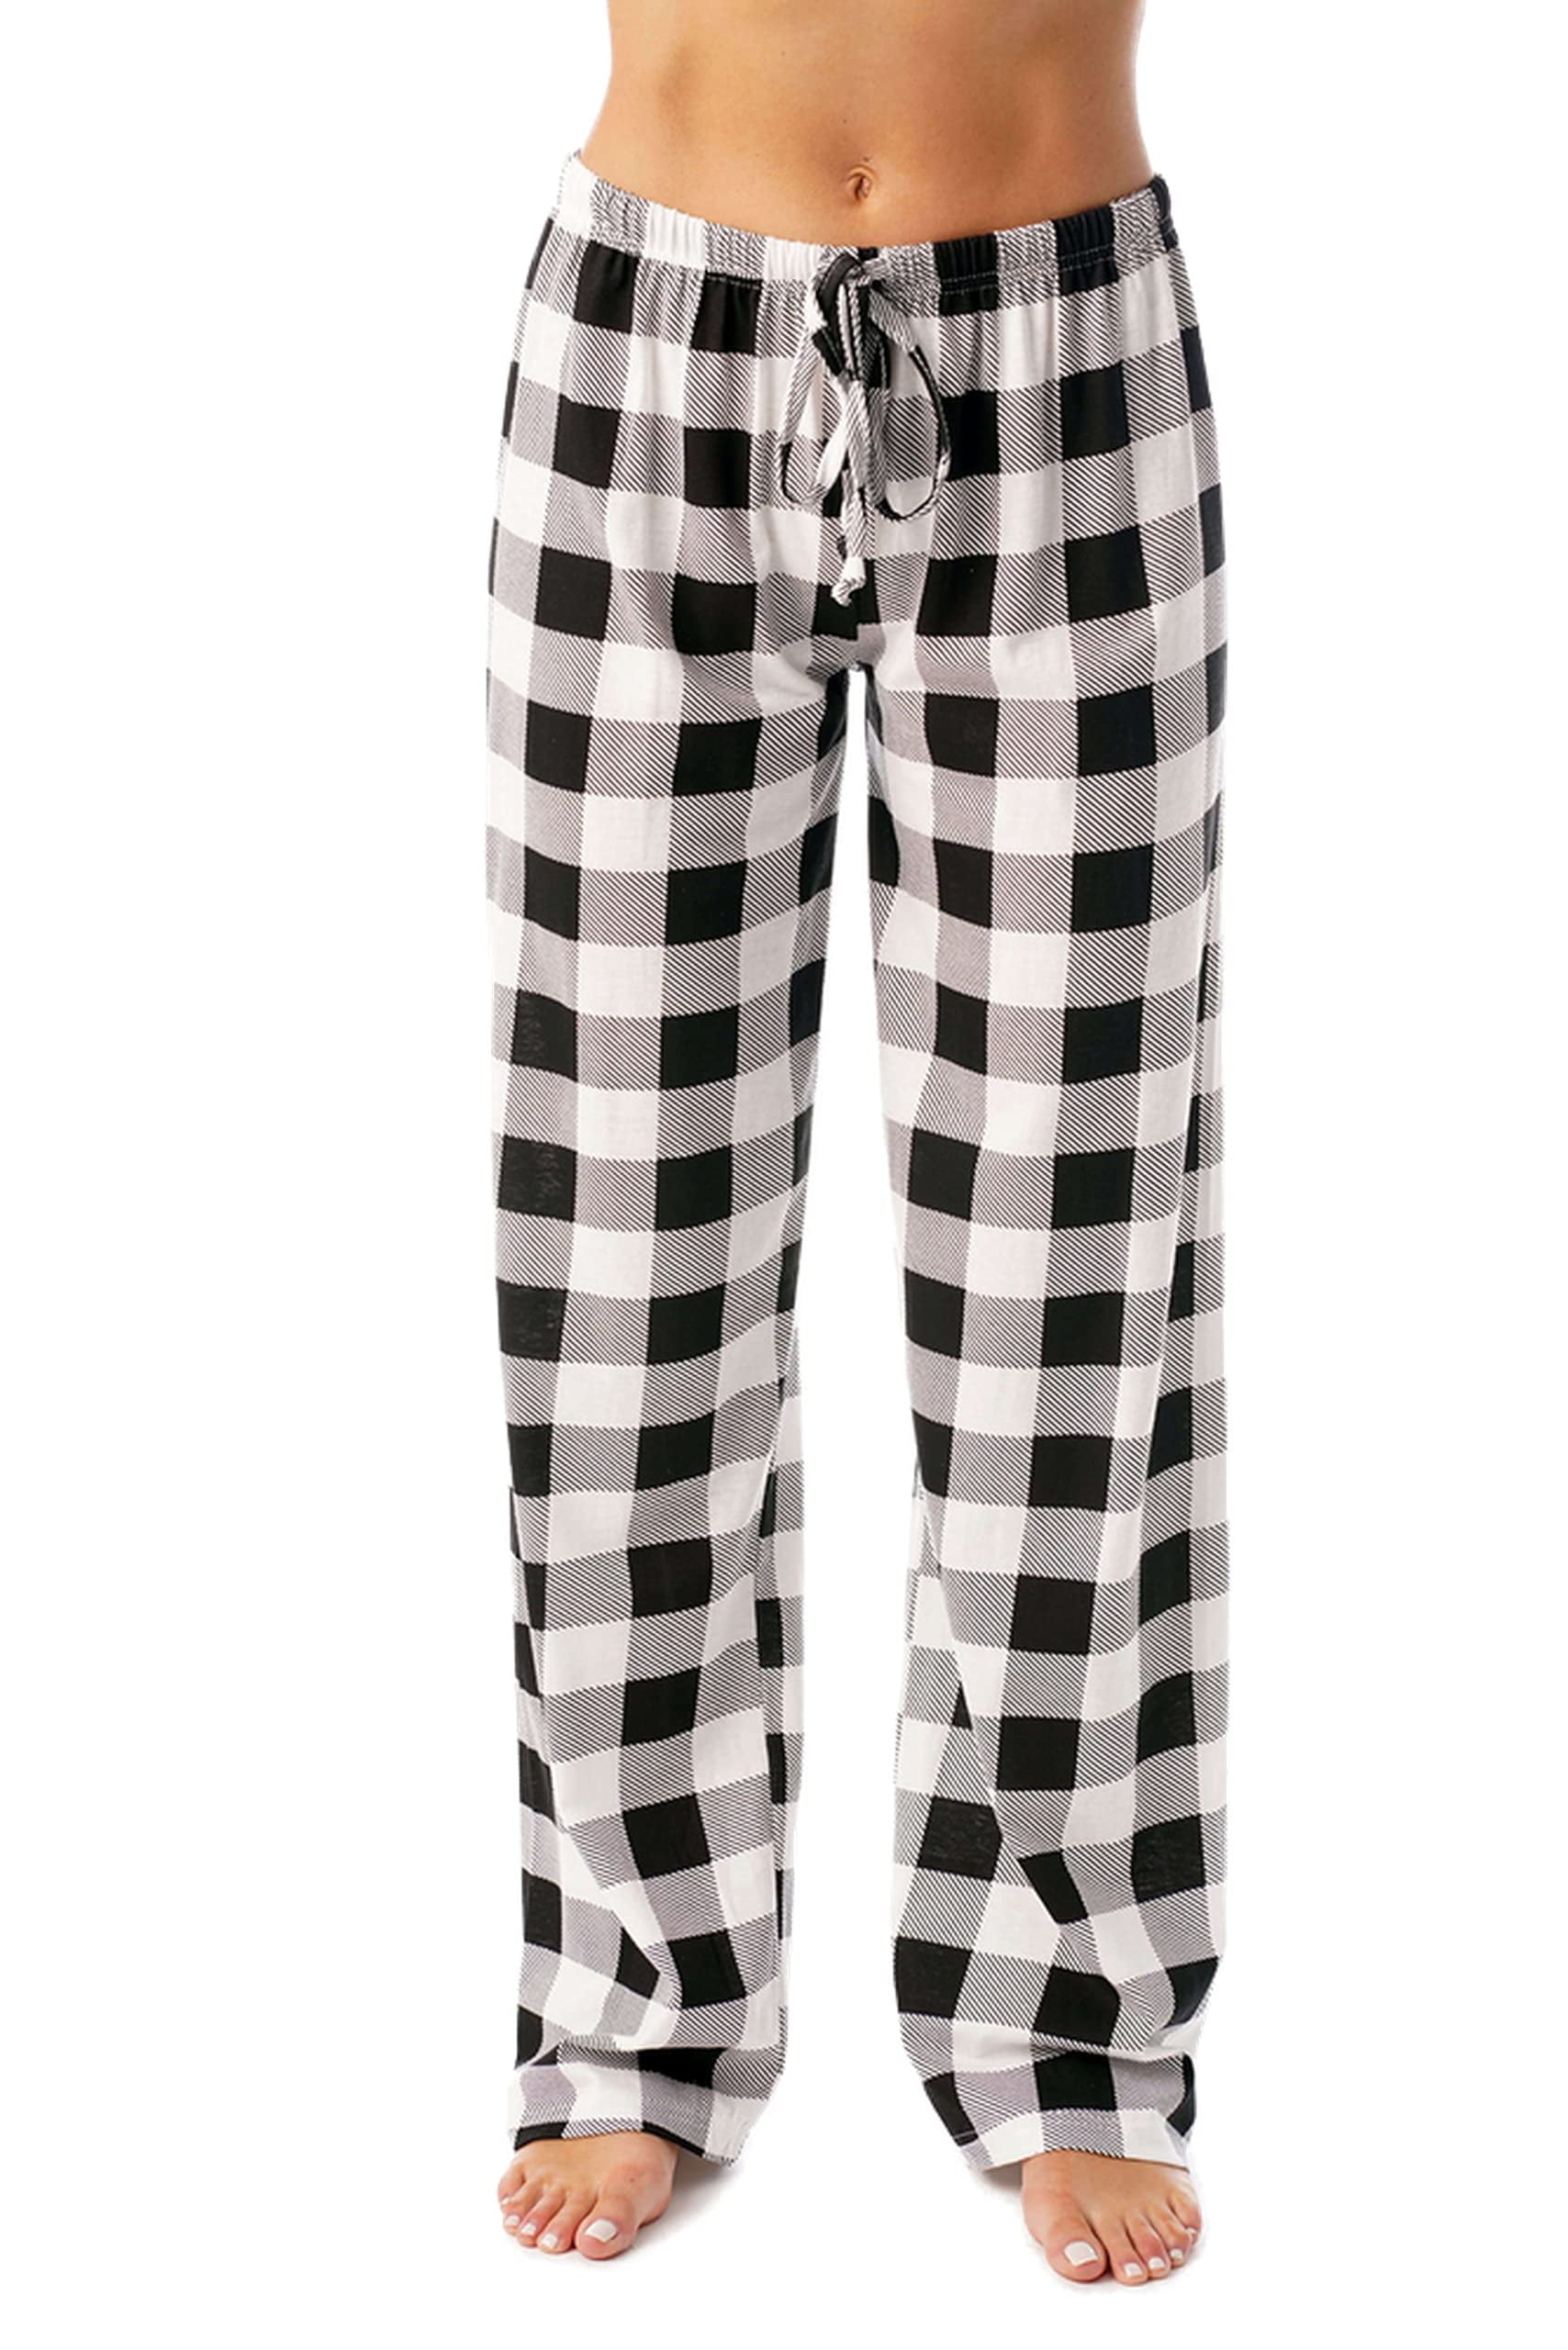 Just Love Women Buffalo Plaid Pajama Pants Sleepwear. (White Black Buffalo  Plaid, X-Large)